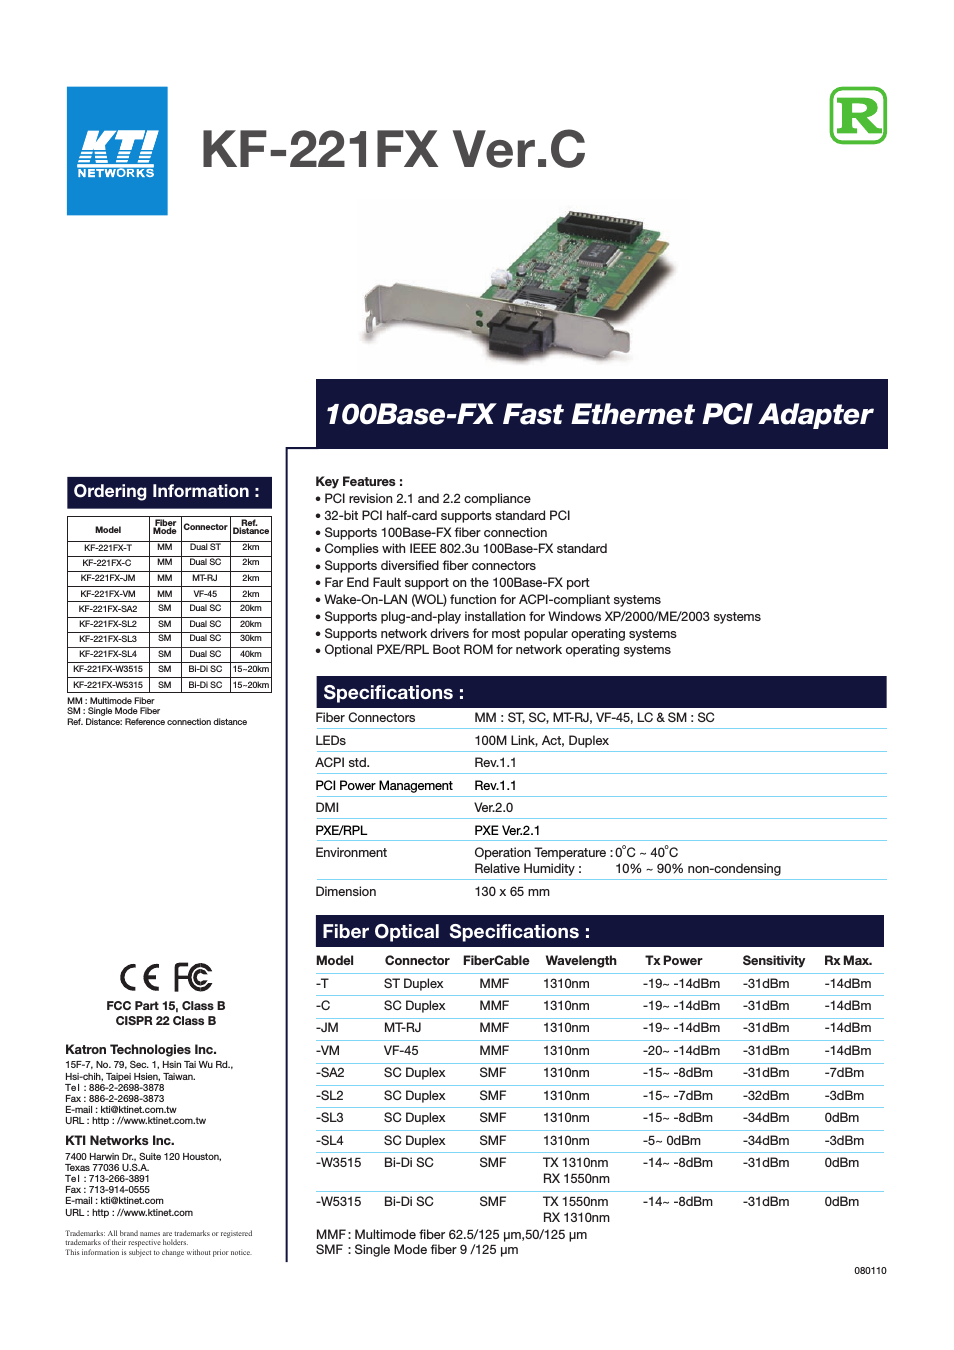 100Base-FX Fast Ethernet PCI Adapter KF-221FX Ver.C